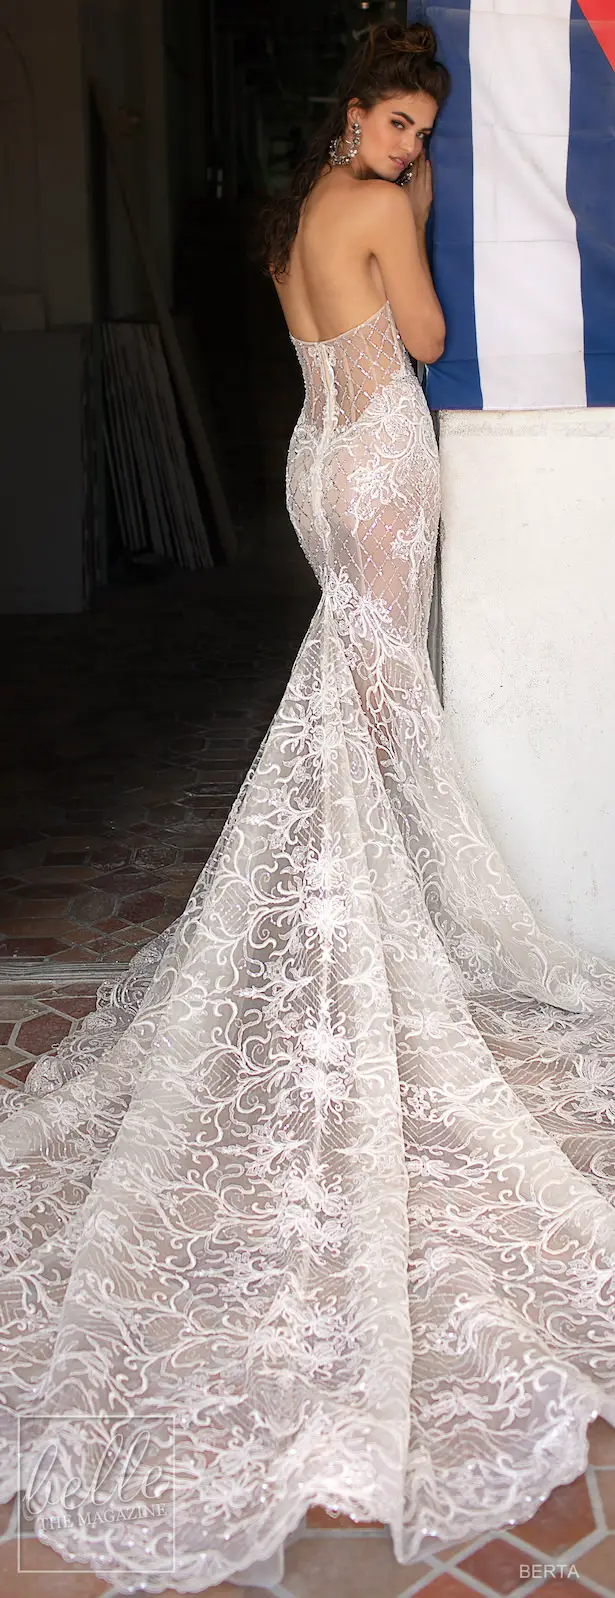 BERTA Wedding Dresses Spring 2019 : Miami Bridal Collection